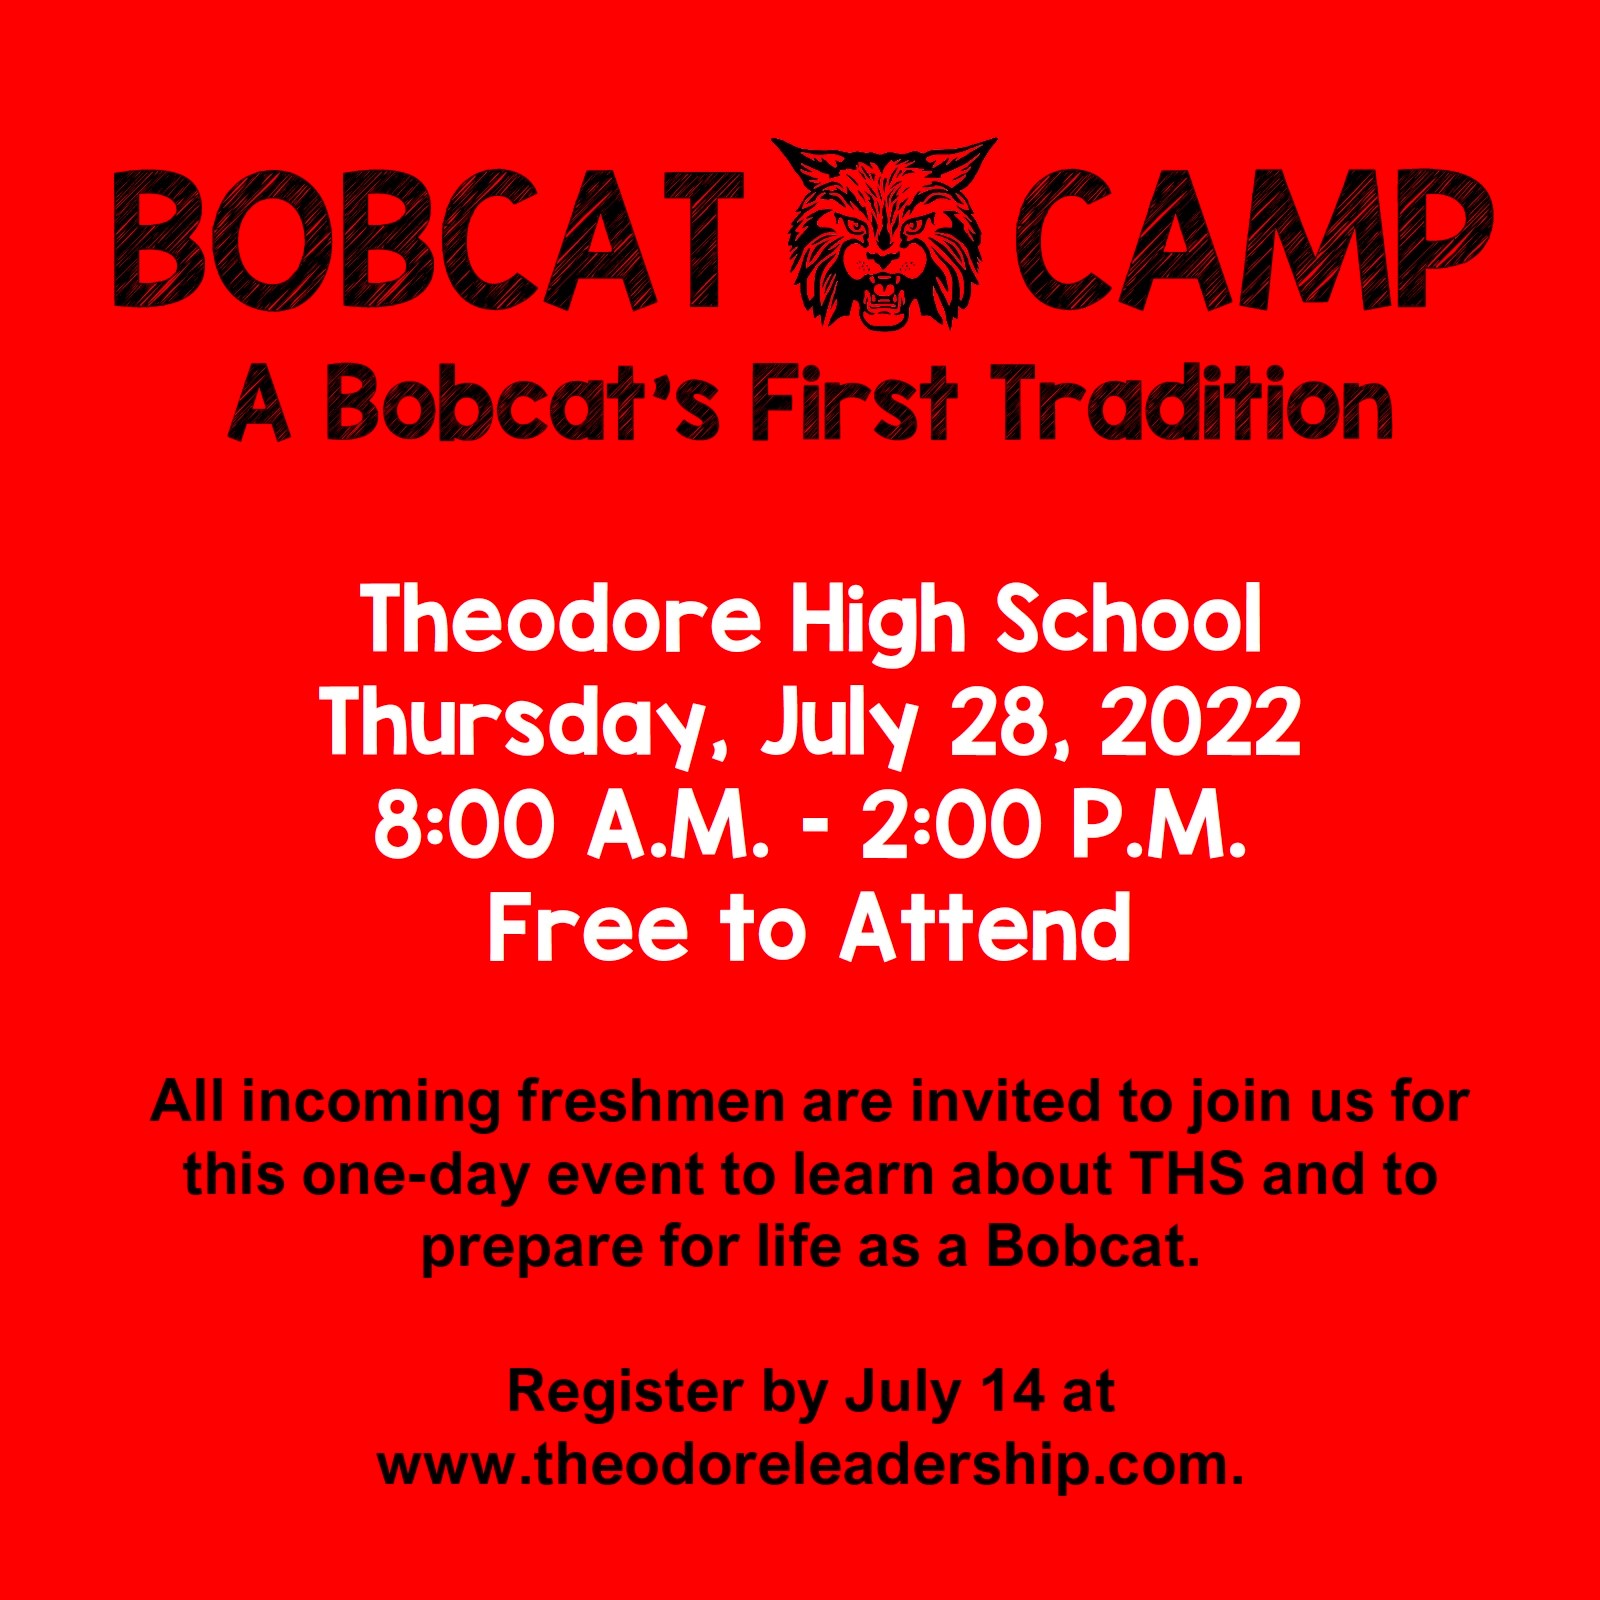 Bobcat Camp Information